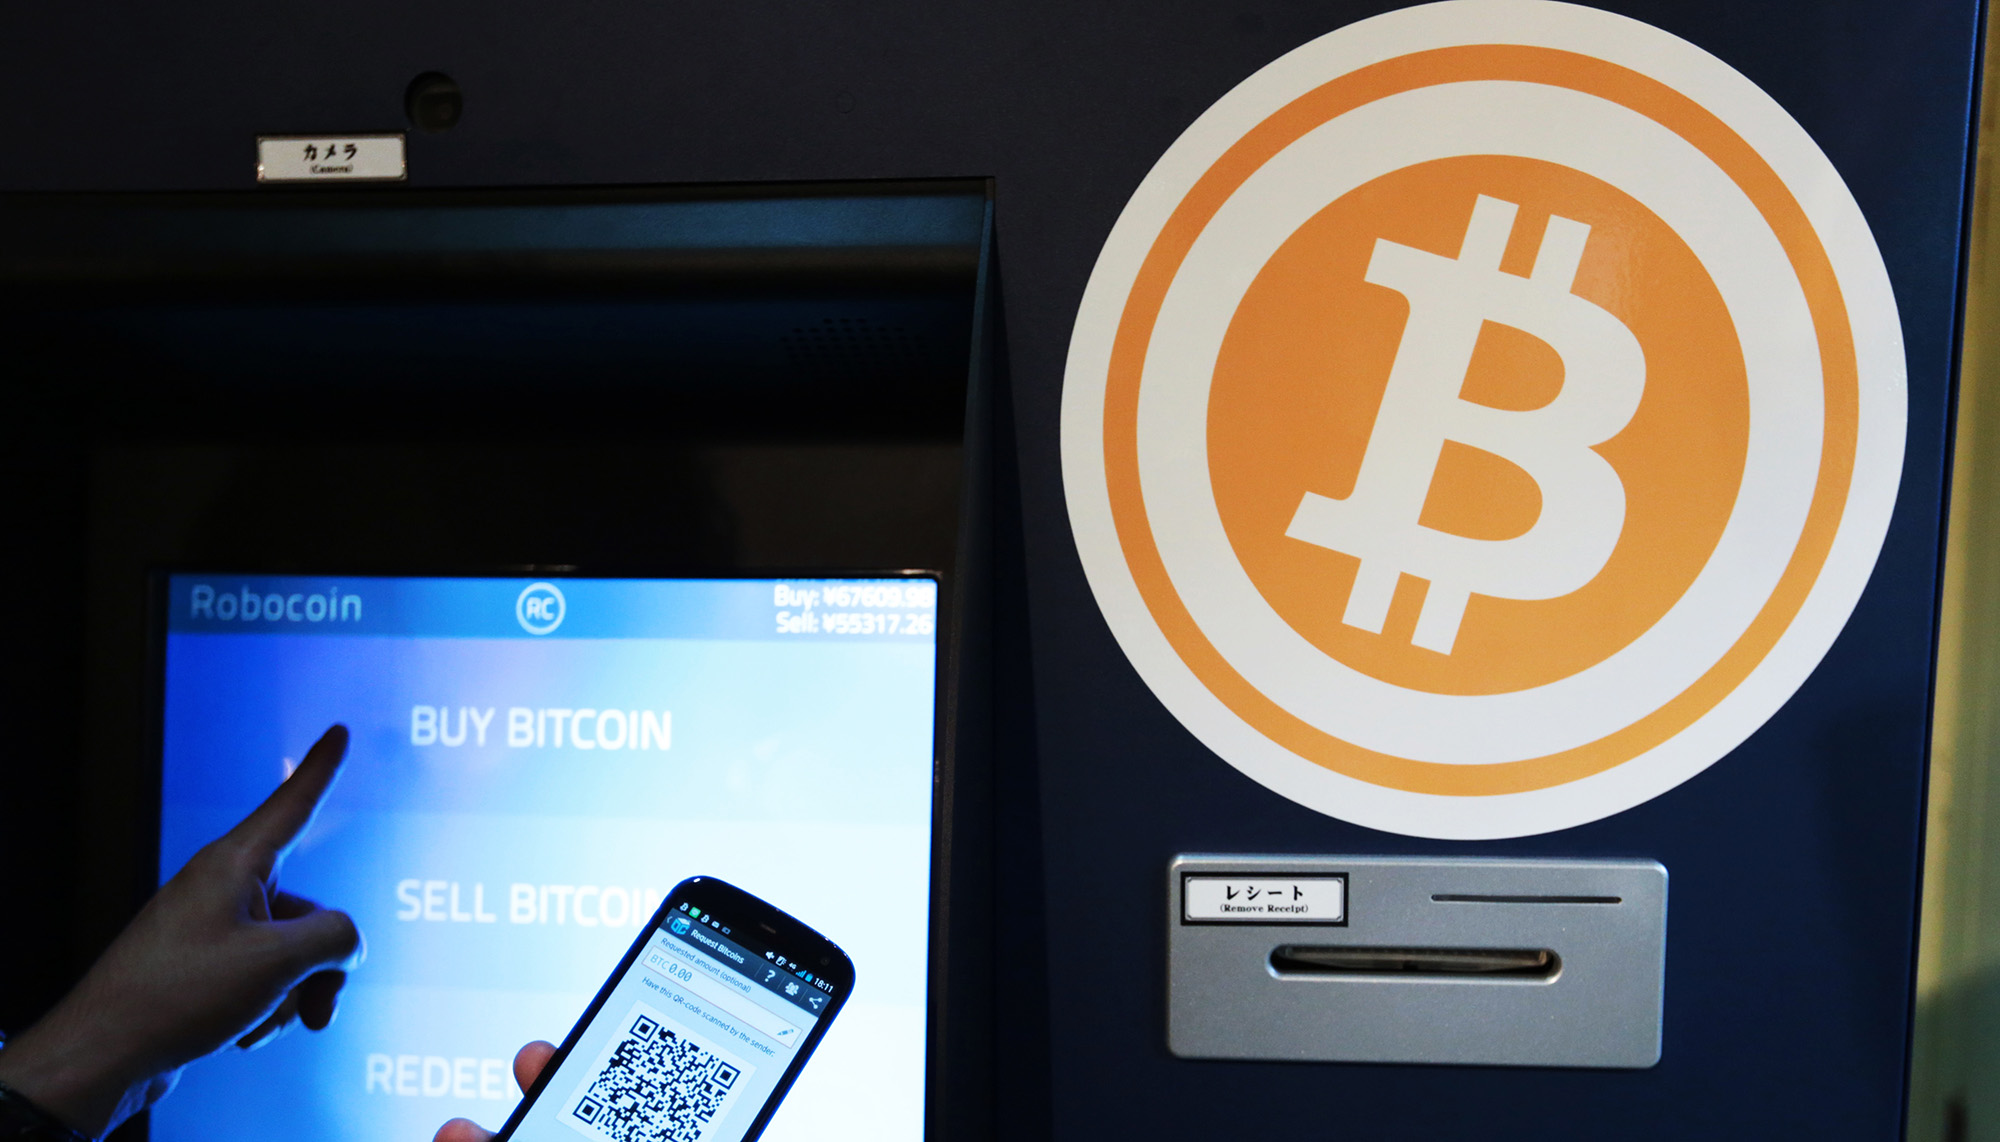 Bitcoin automated teller machine